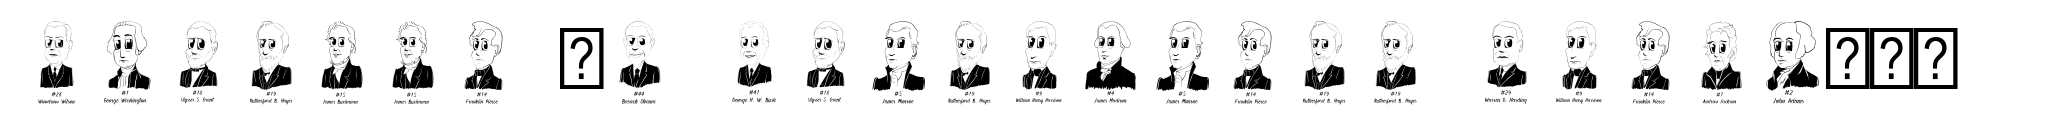 Cartoon US Presidents Dingbats image